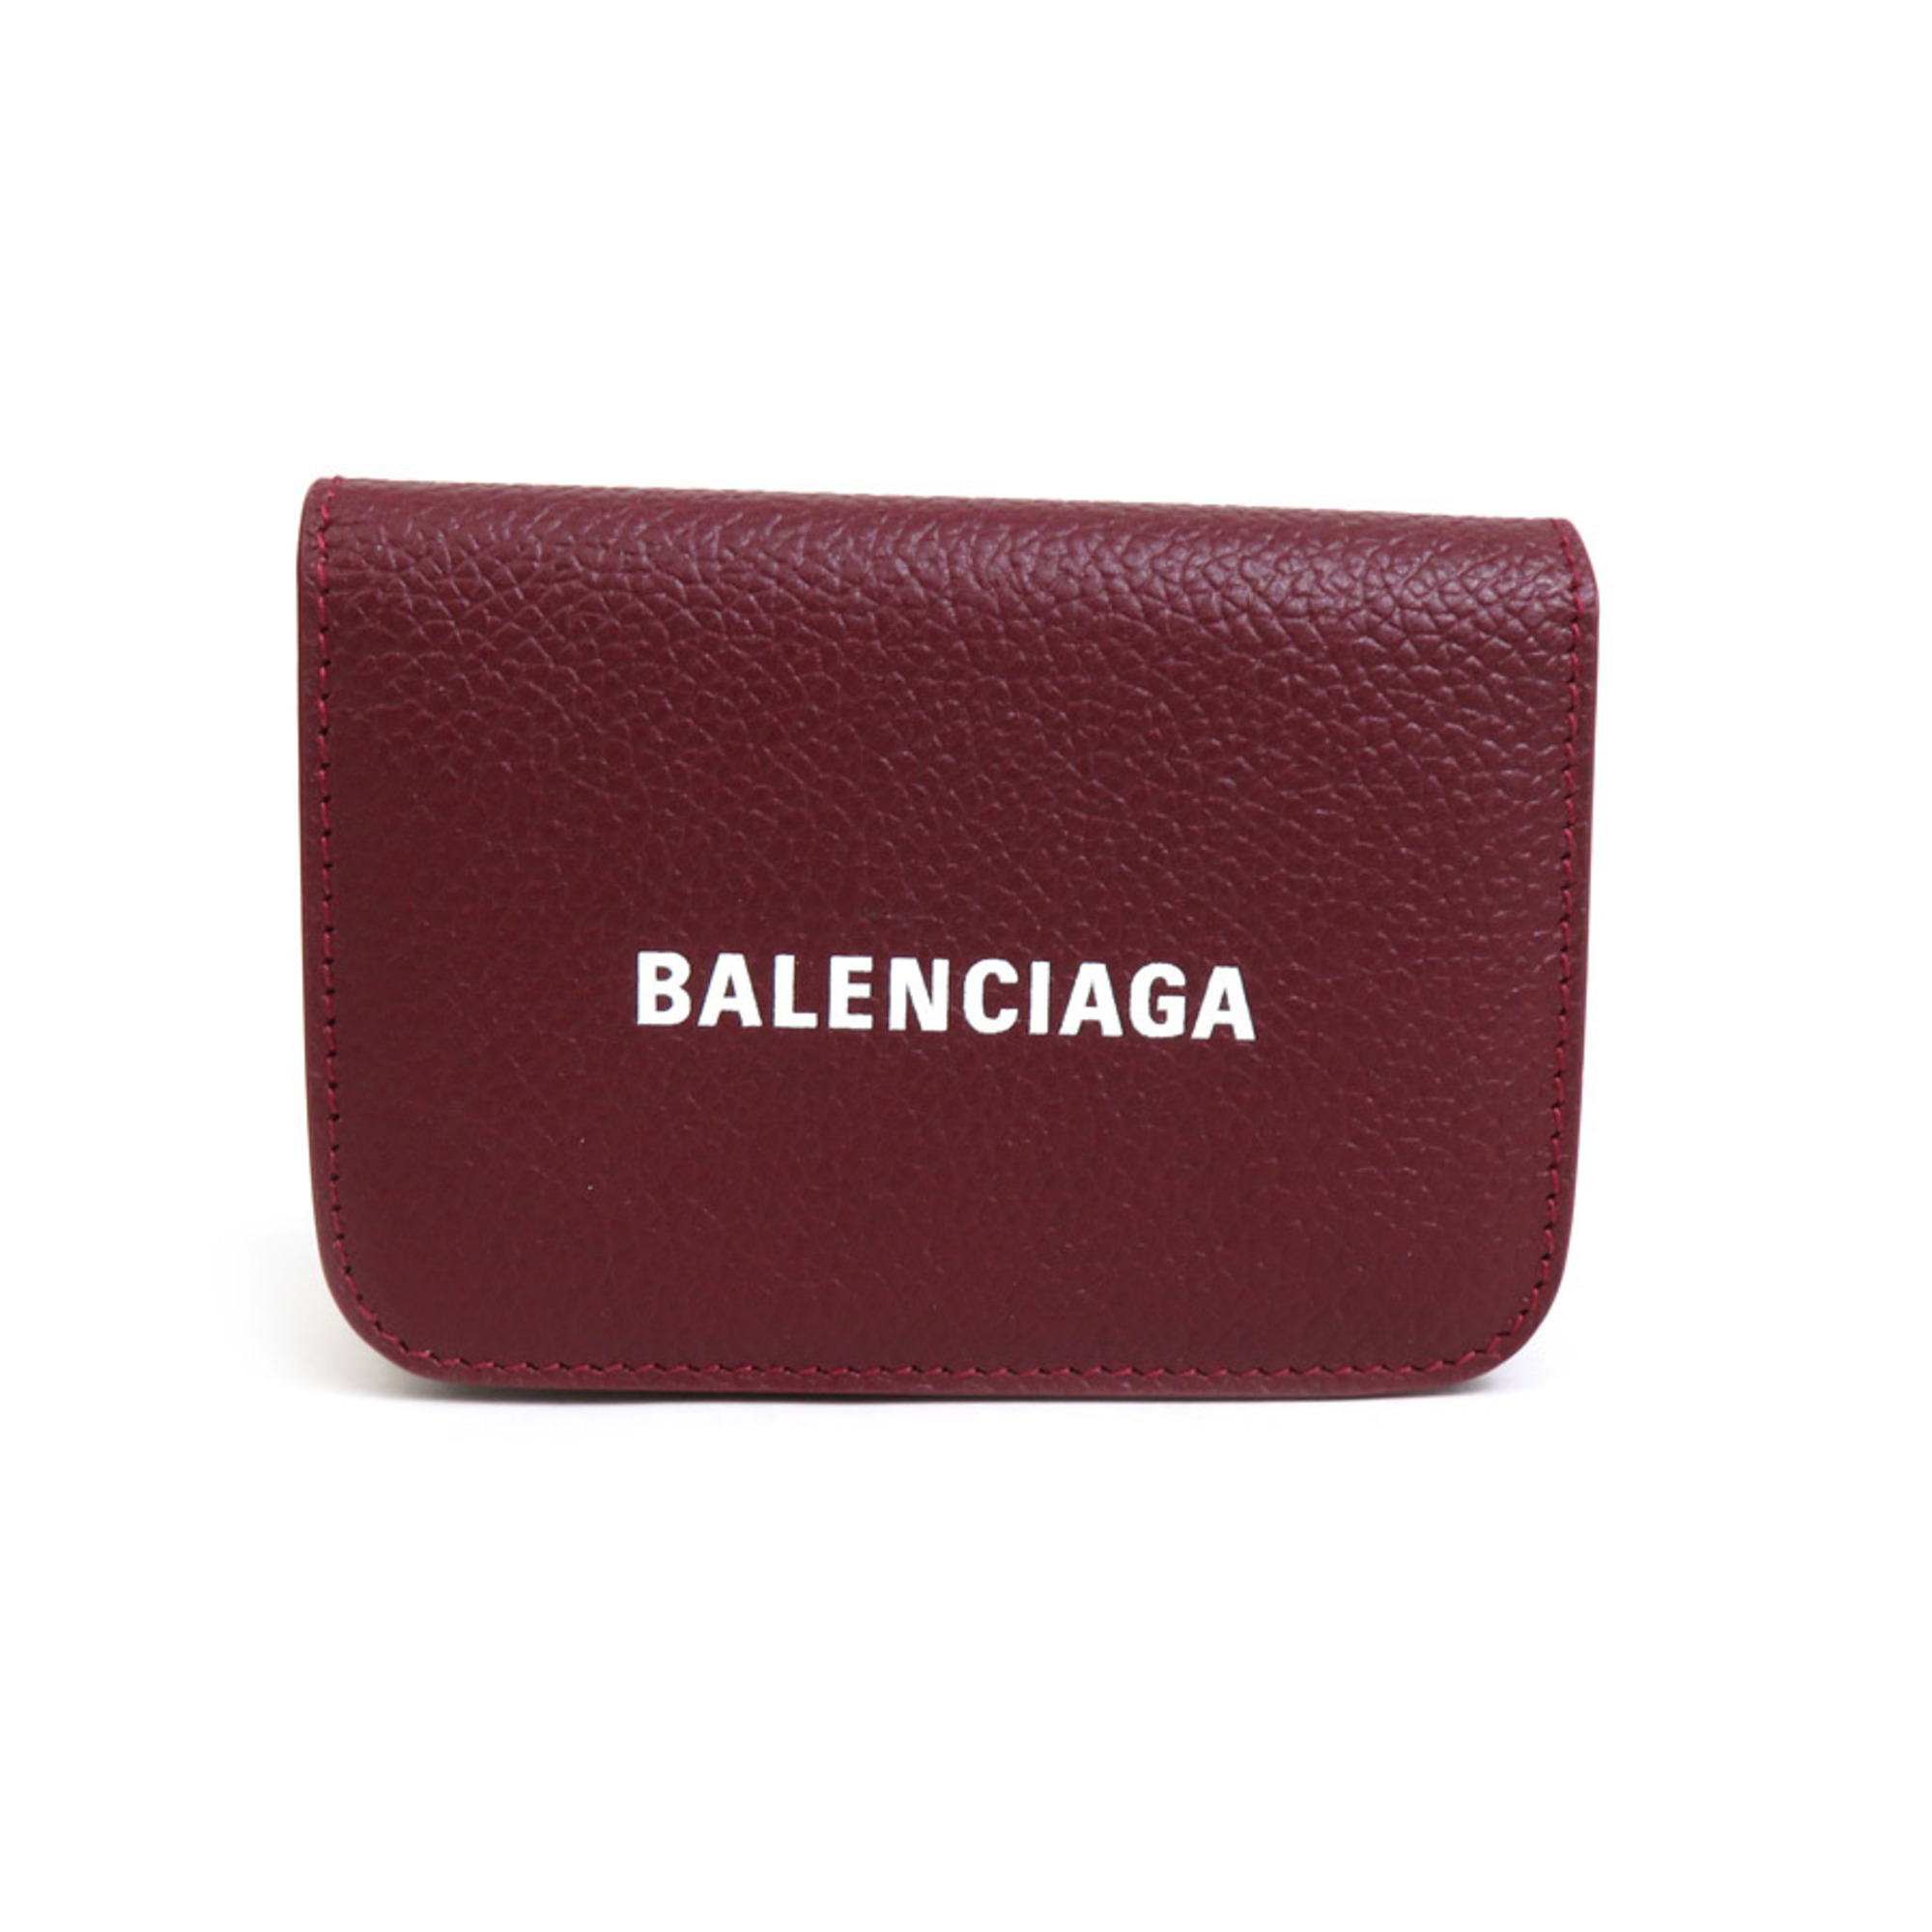 BALENCIAGA Trifold Wallet Leather Bordeaux Unisex